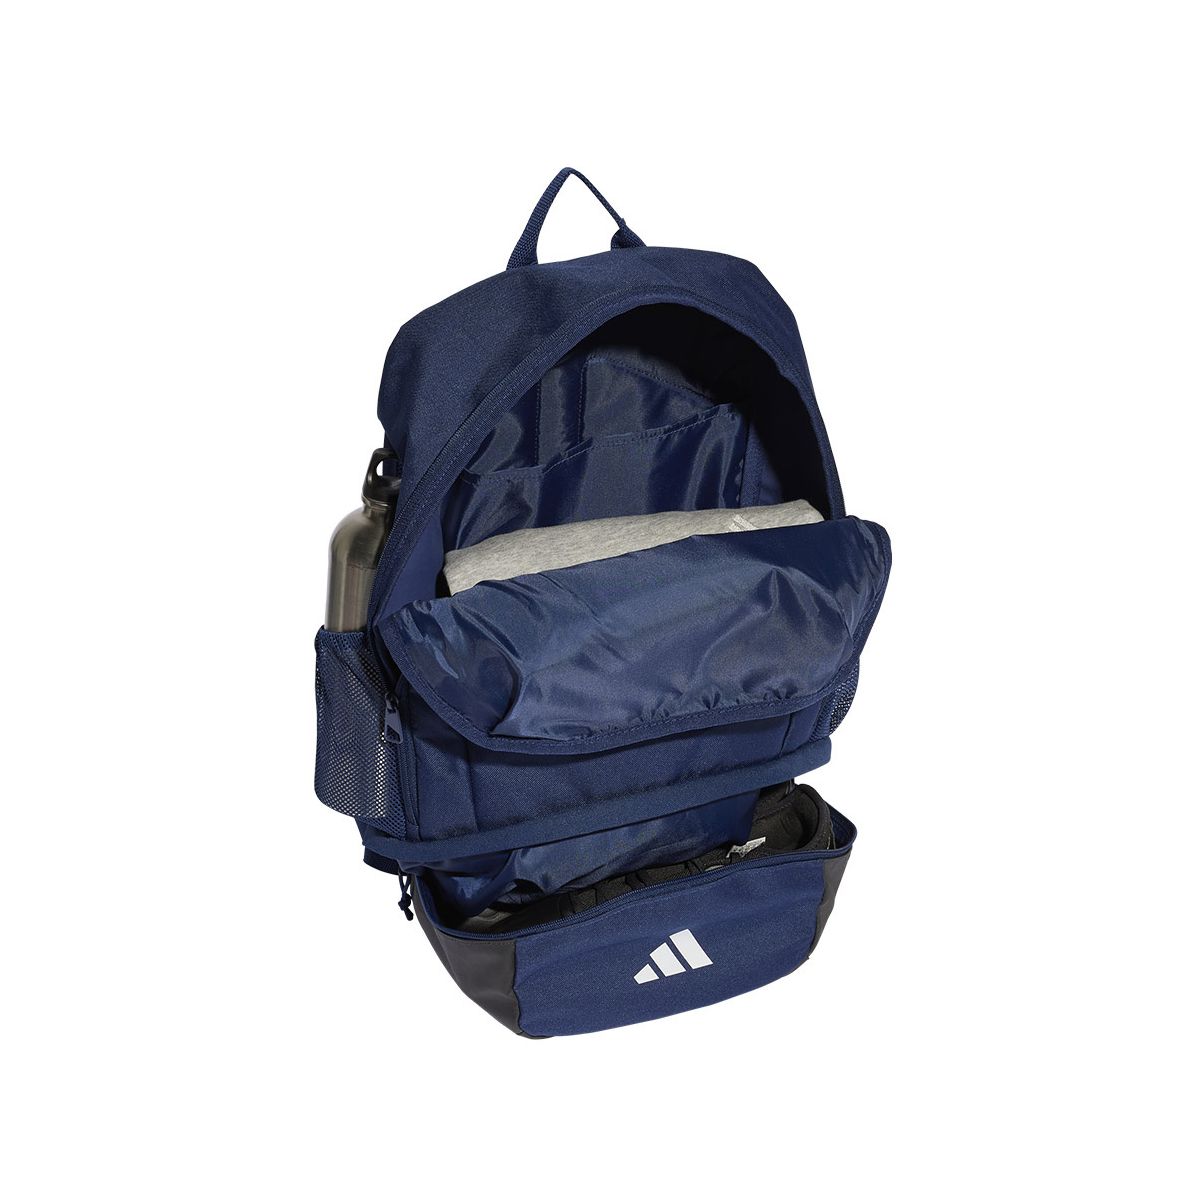 Plecak Adidas TIRO granatowy (IB8646)